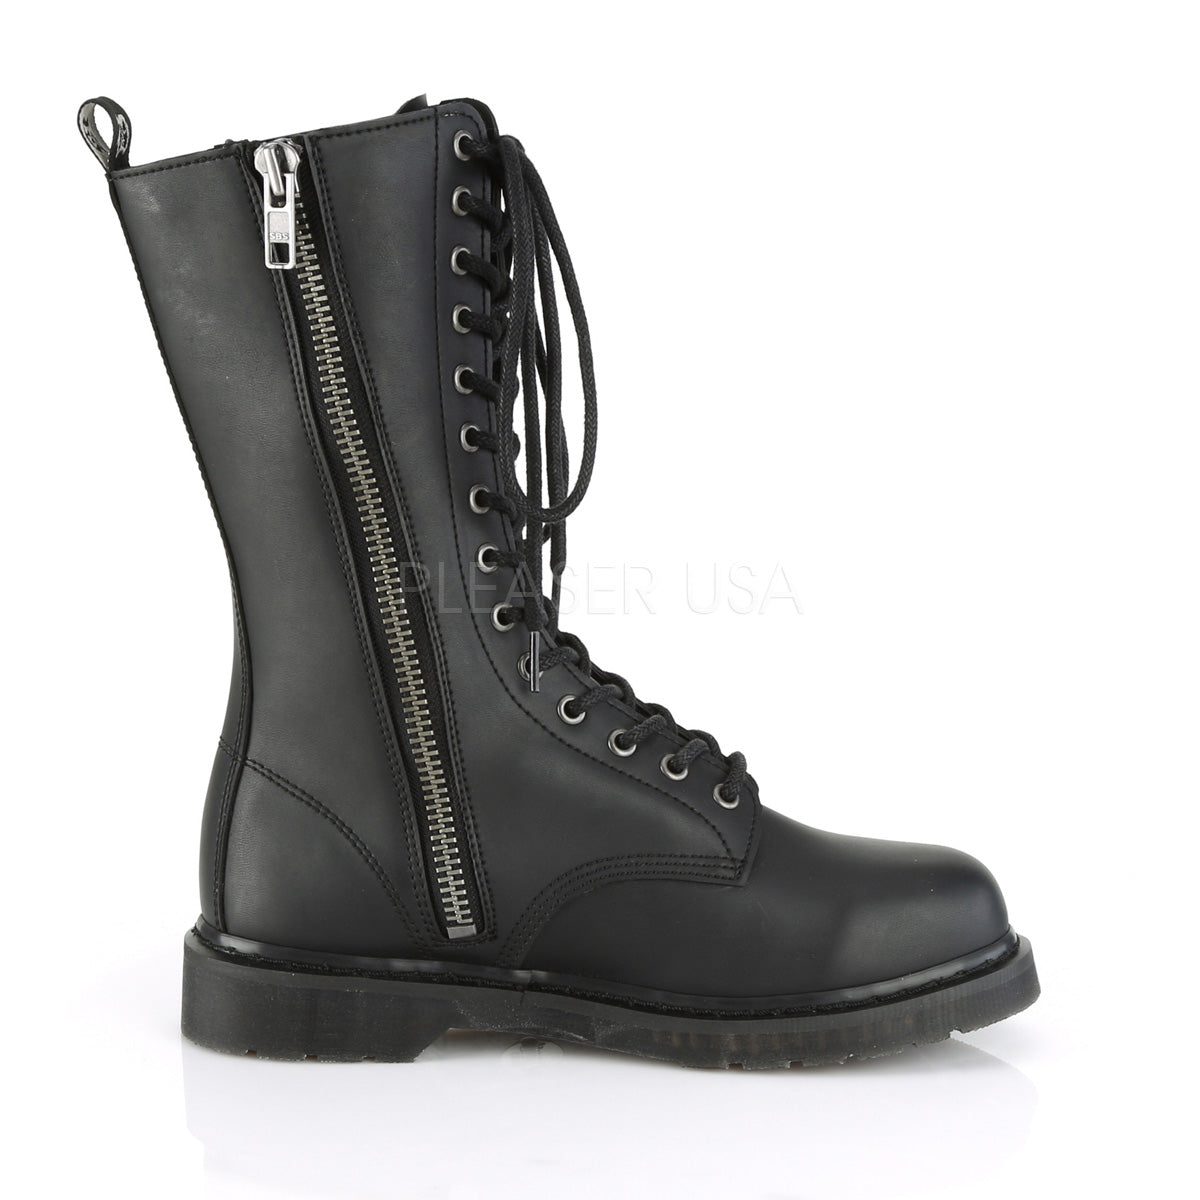 1 Inch Heel BOLT-300 Black Vegan Leather